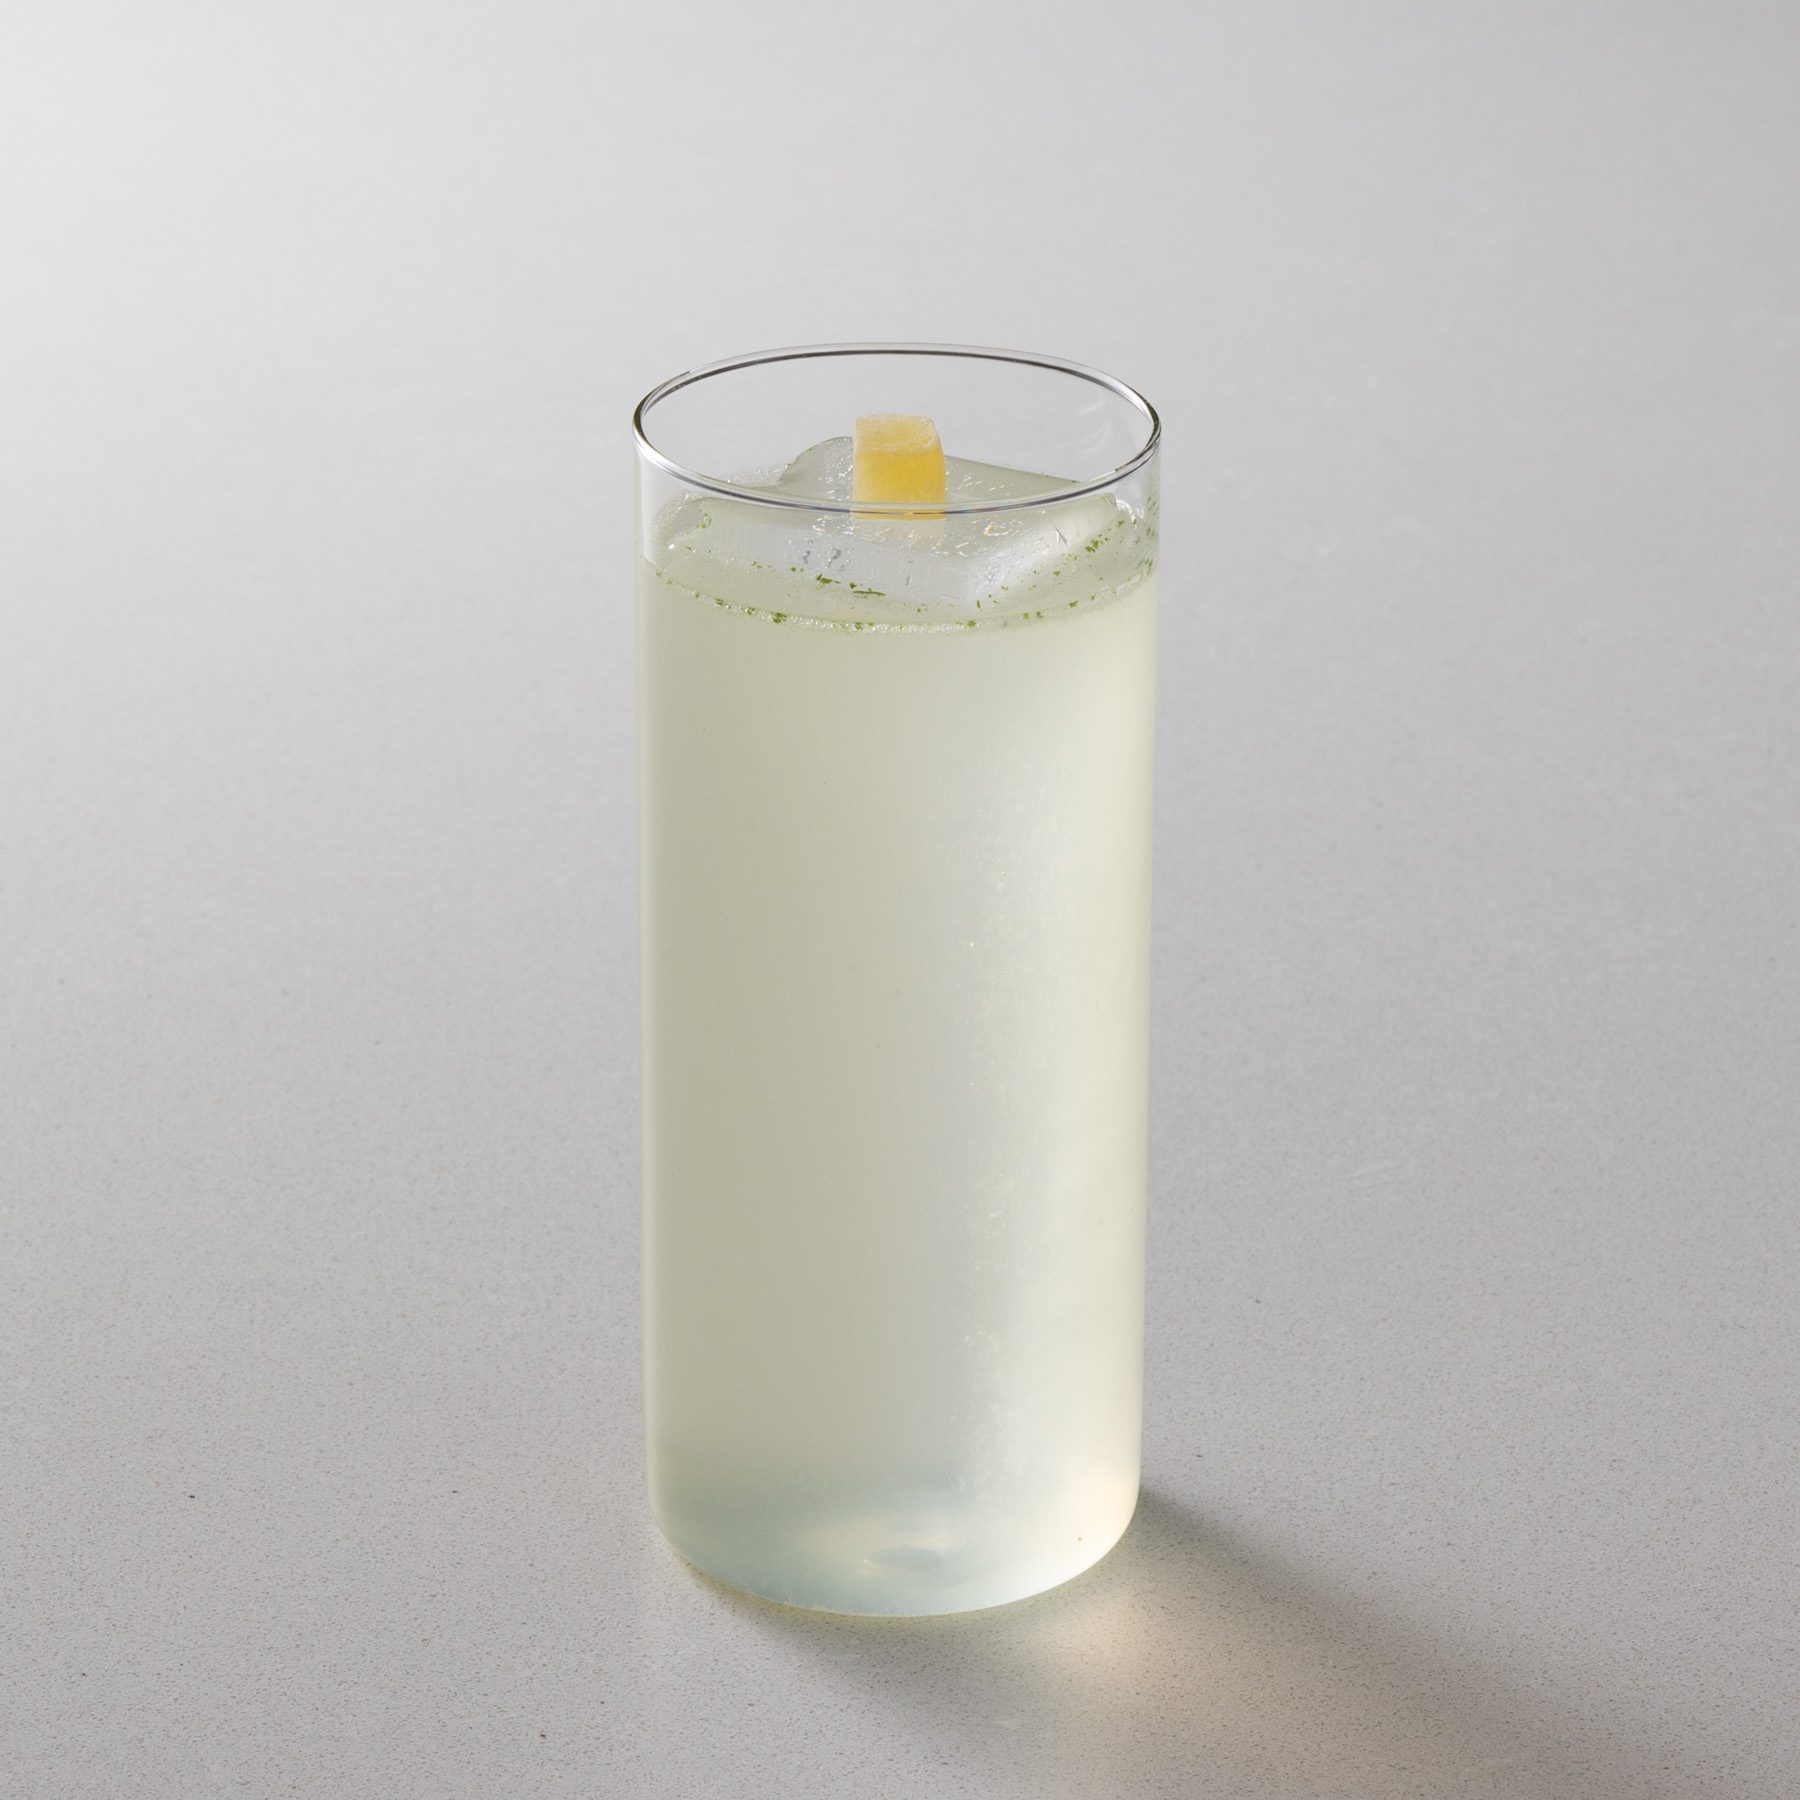 Gin Gin Mule cocktail